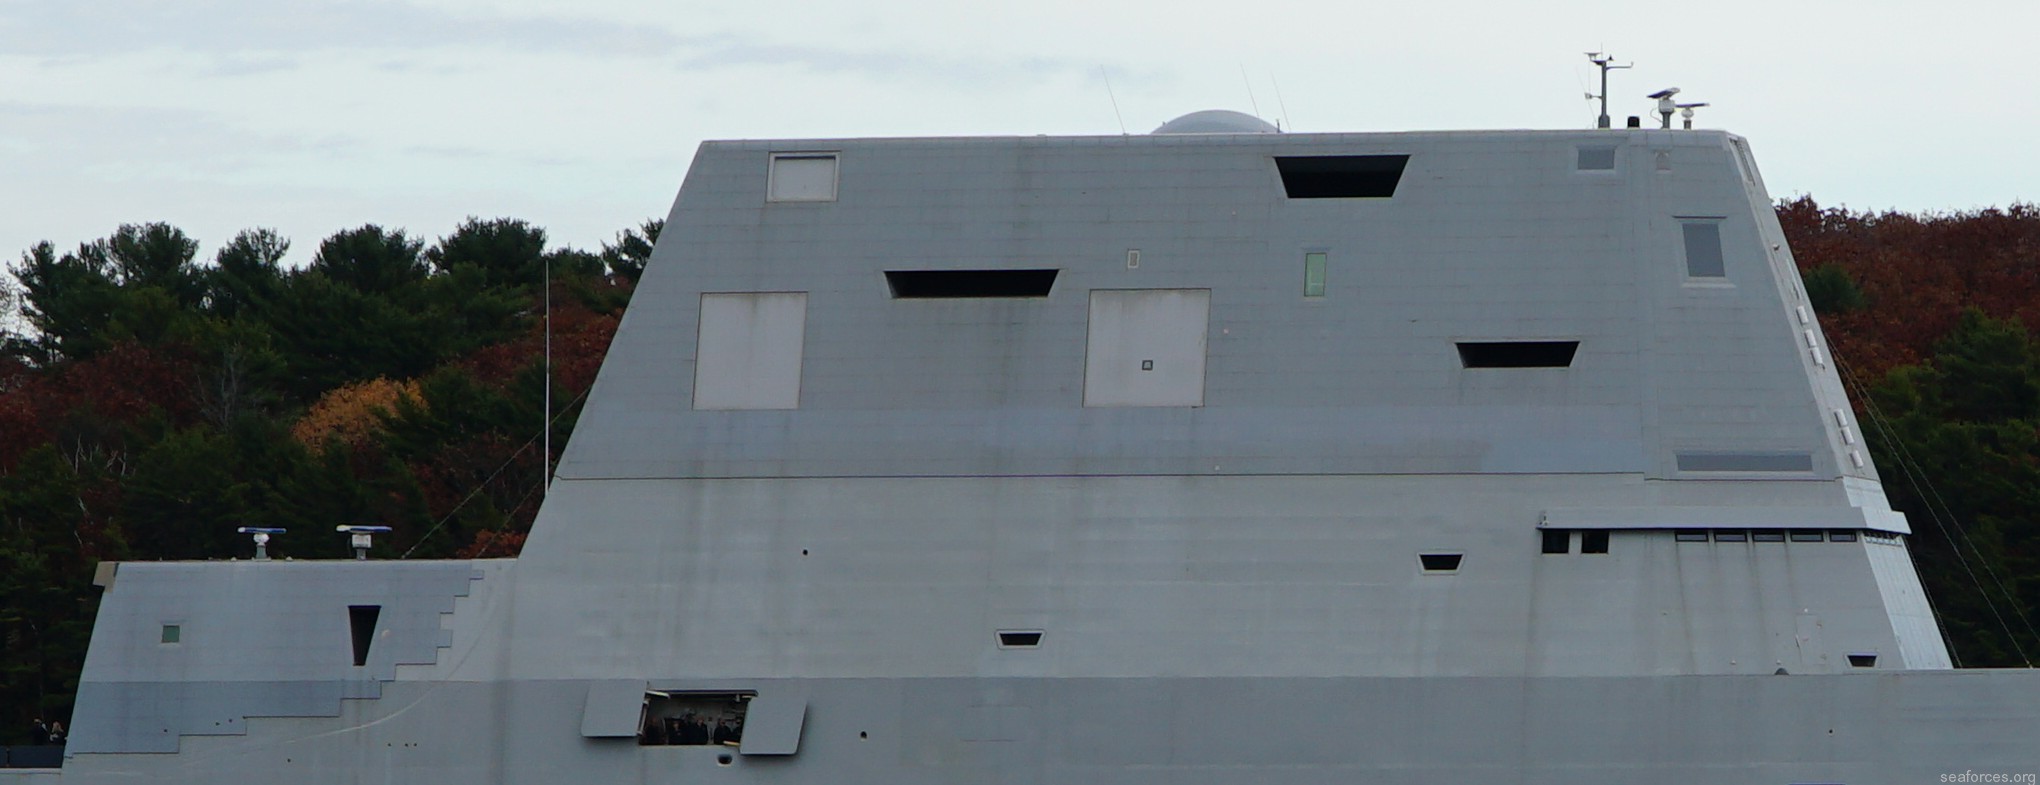 zumwalt class guided missile destroyer us navy ddg superstructure radar an/spy-3 aegis